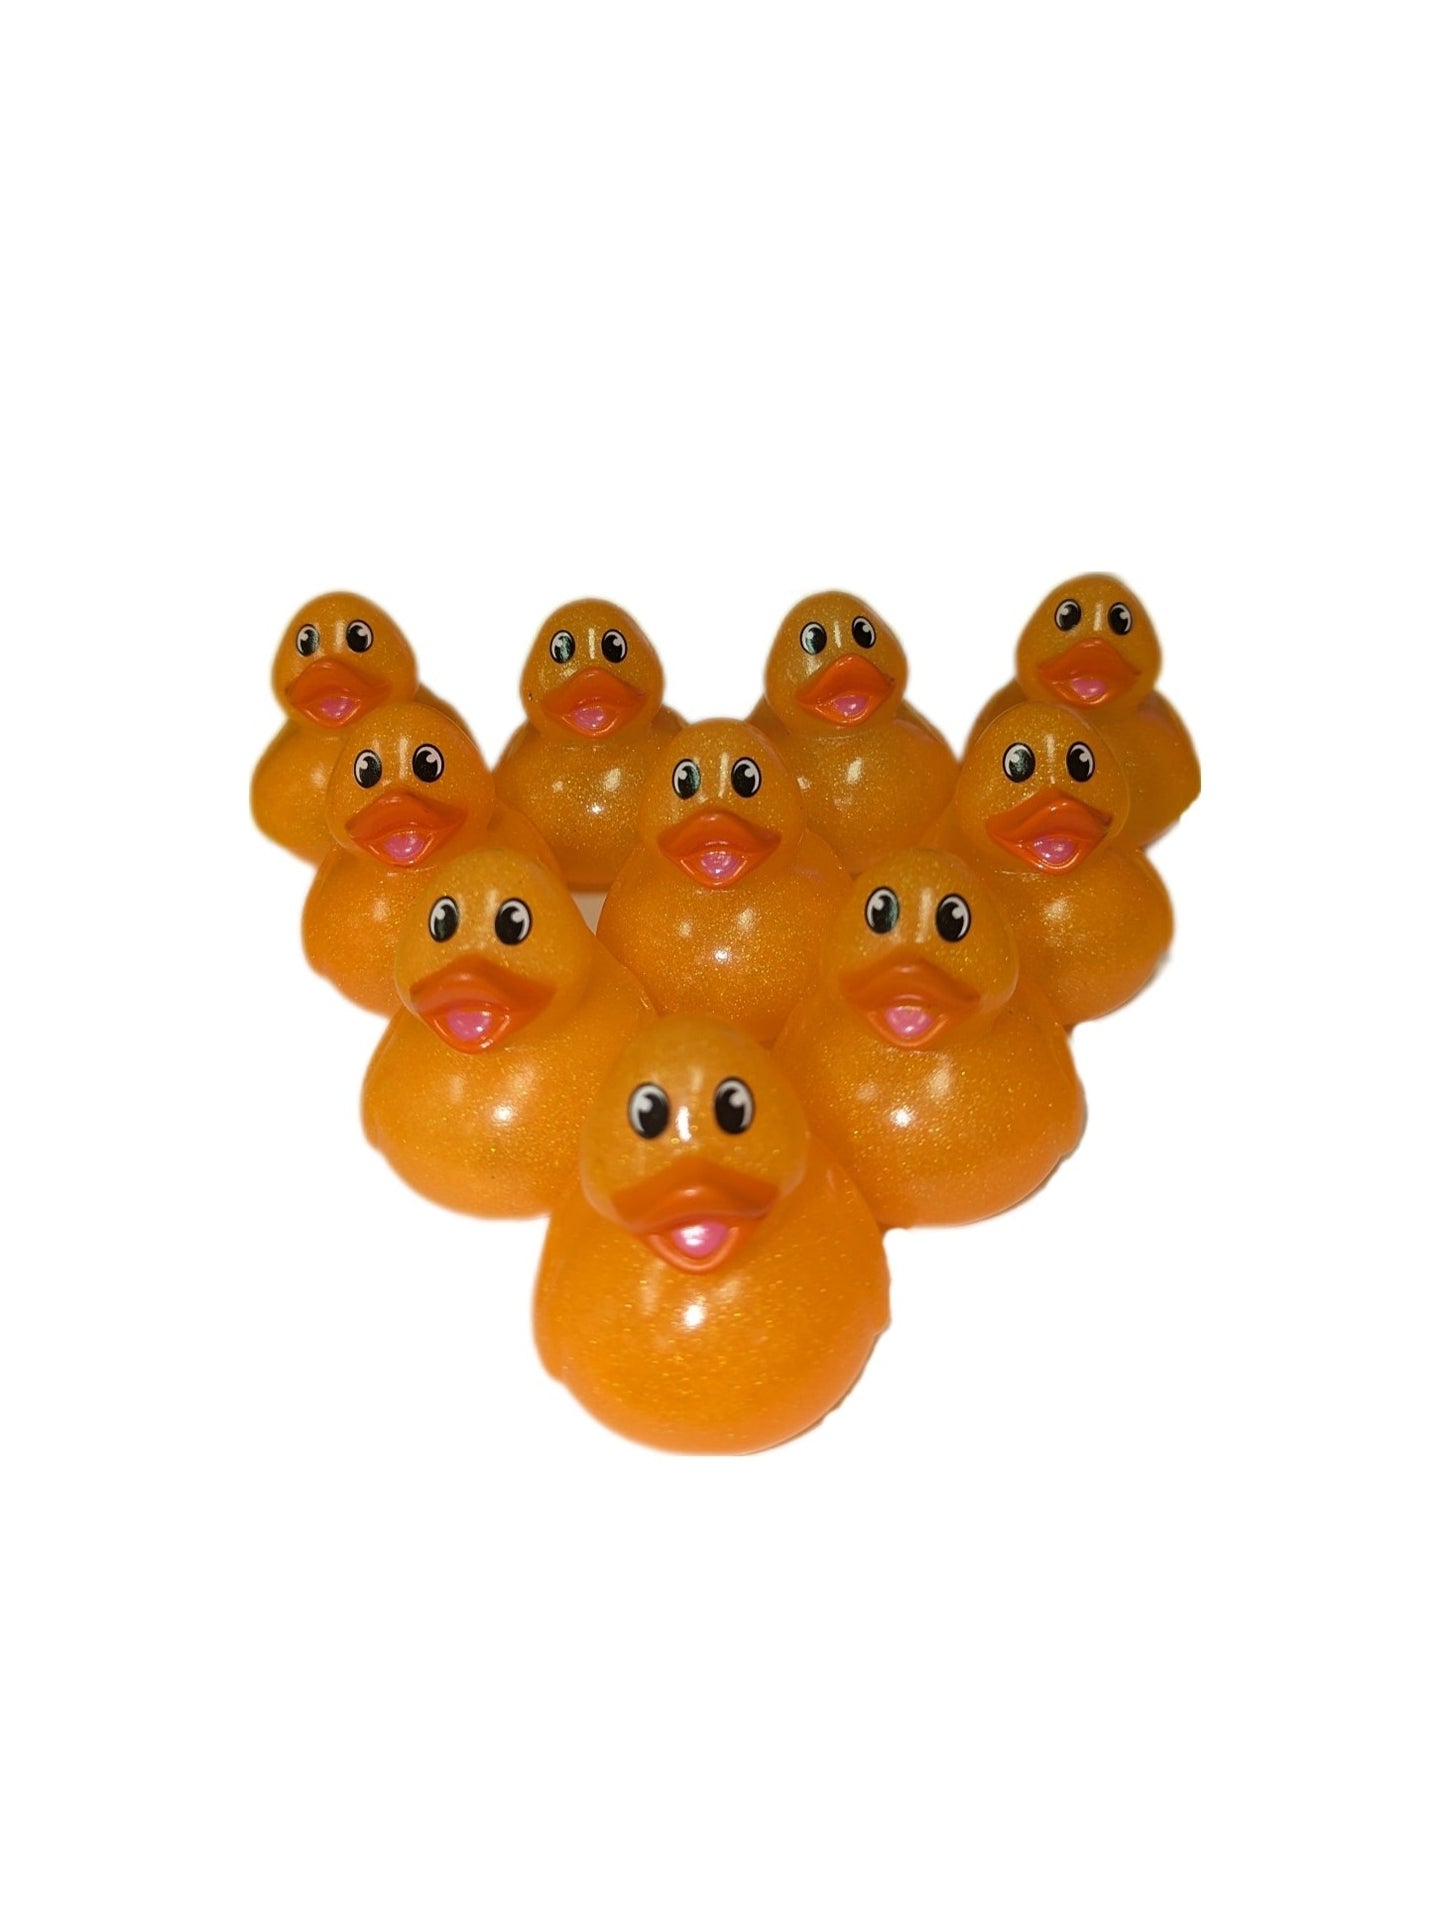 10 Orange Glitter & Orange Beak Ducks - 2" Rubber Ducks